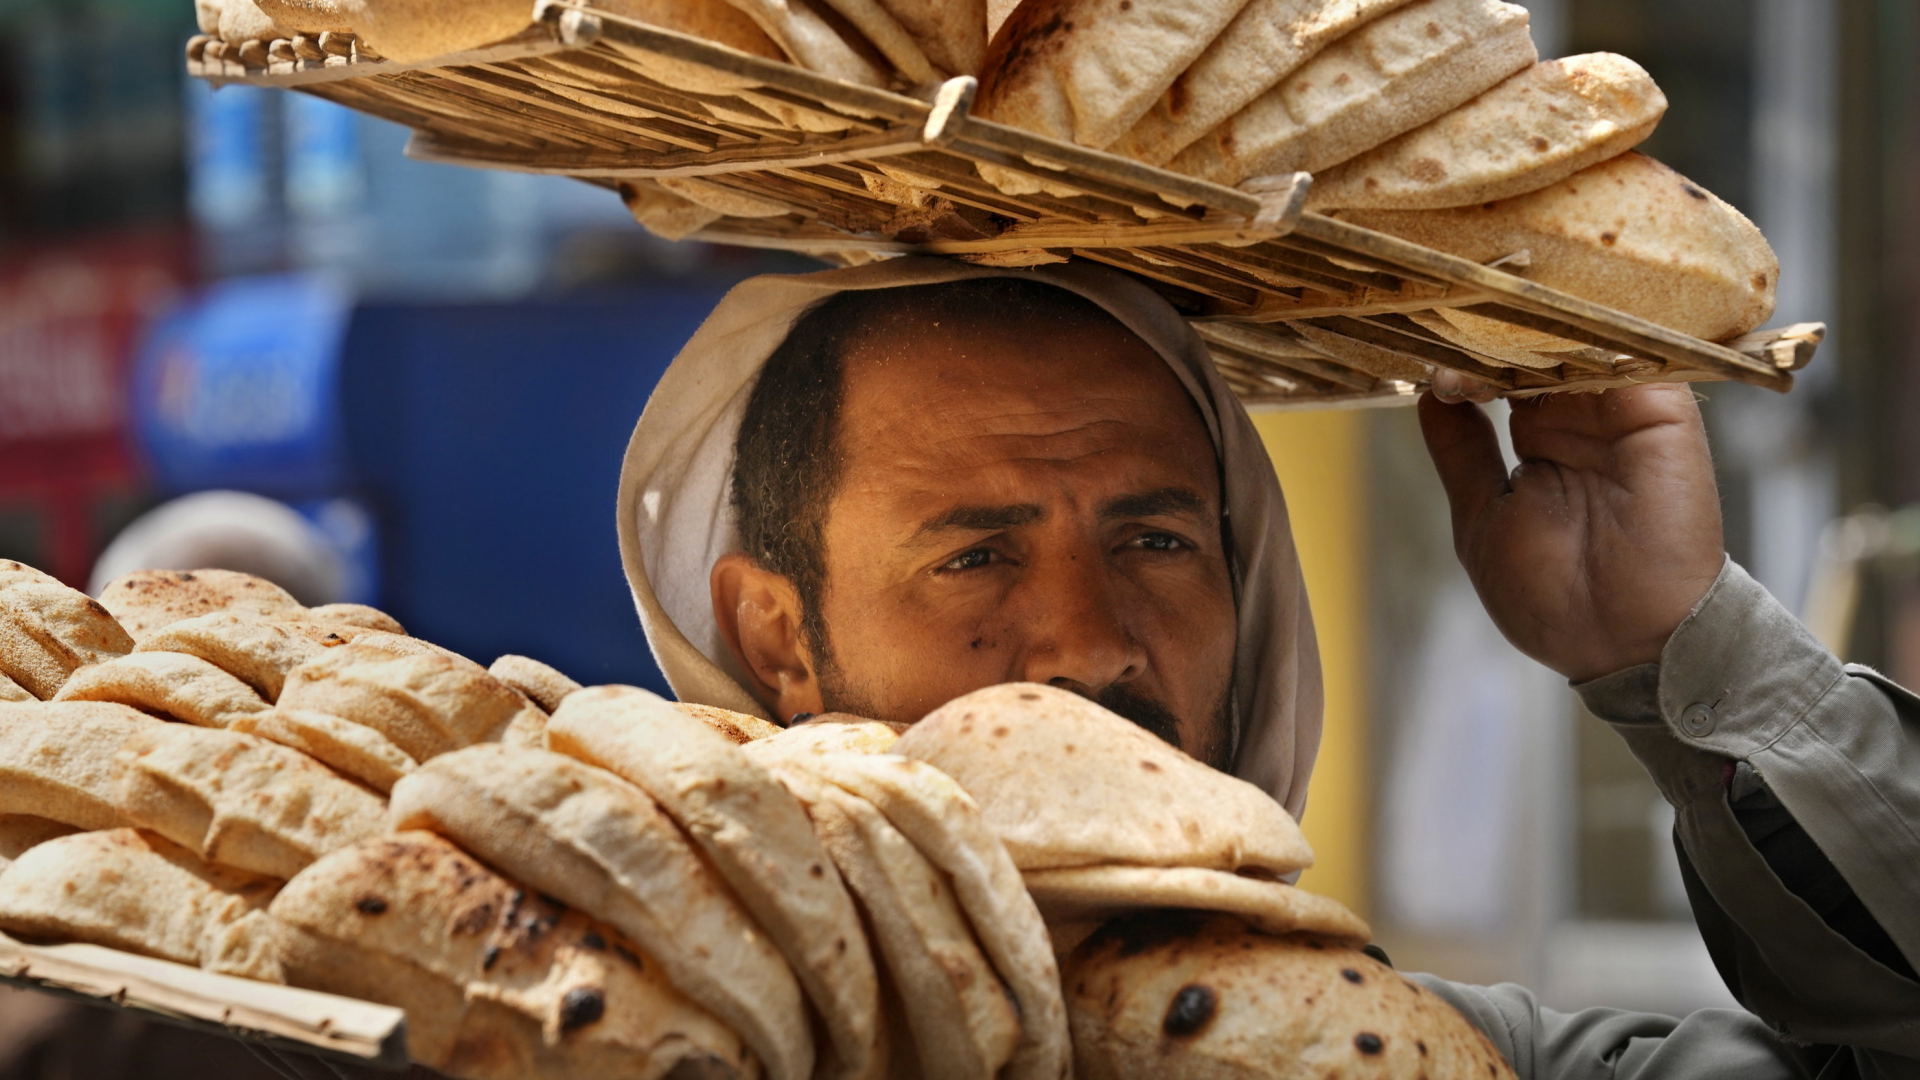 Ägypten: Ramadan beginnt – und Brot wird immer teurer